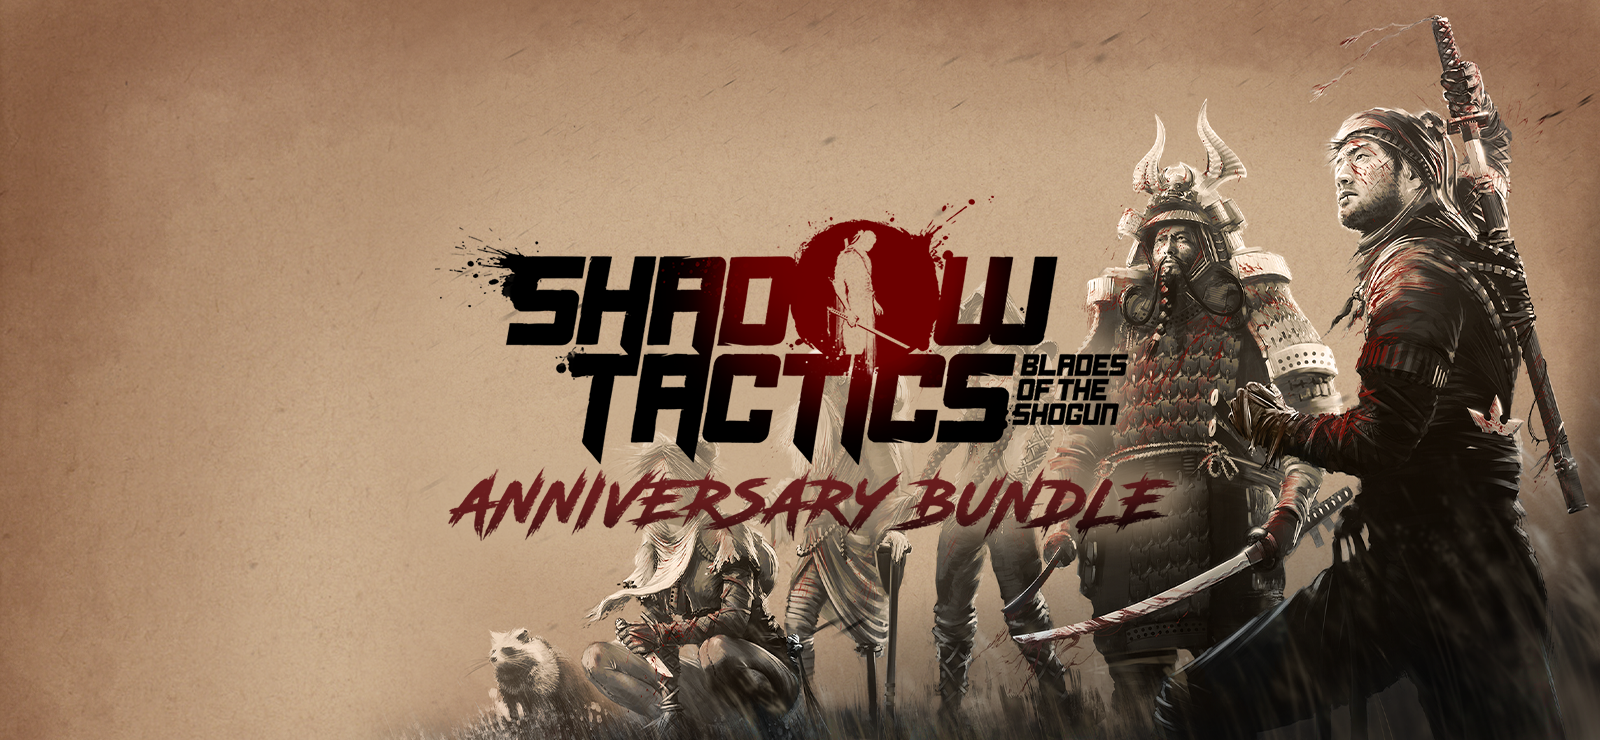 Shadow Tactics: Anniversary Bundle